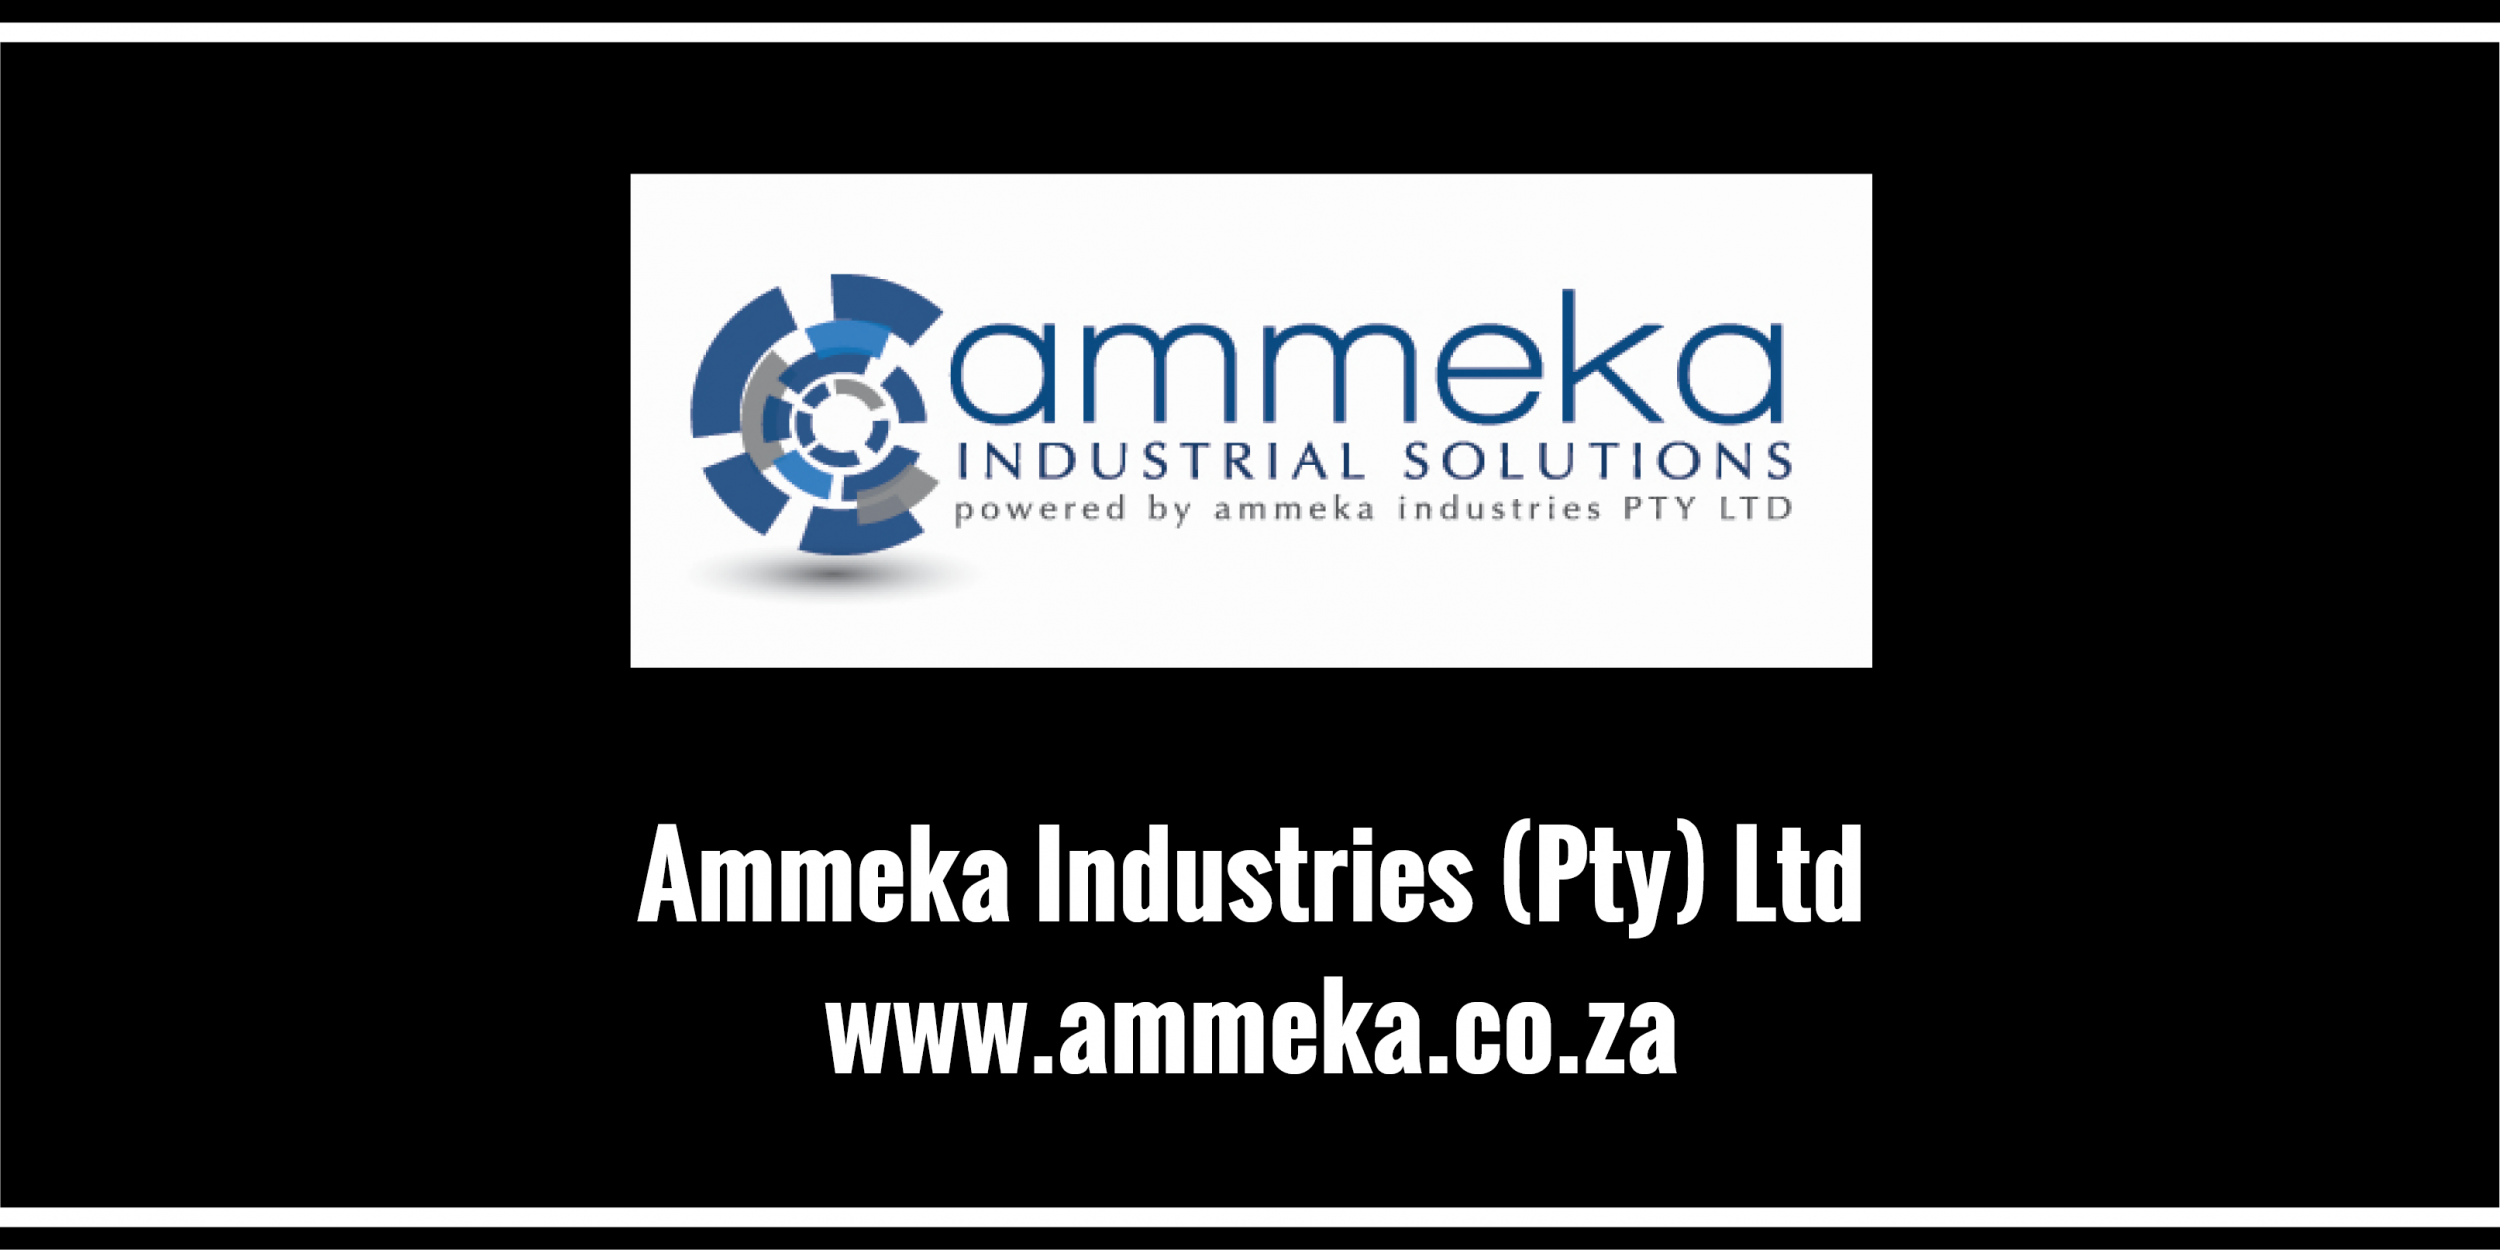 Ammeka Industries (Pty) Ltd